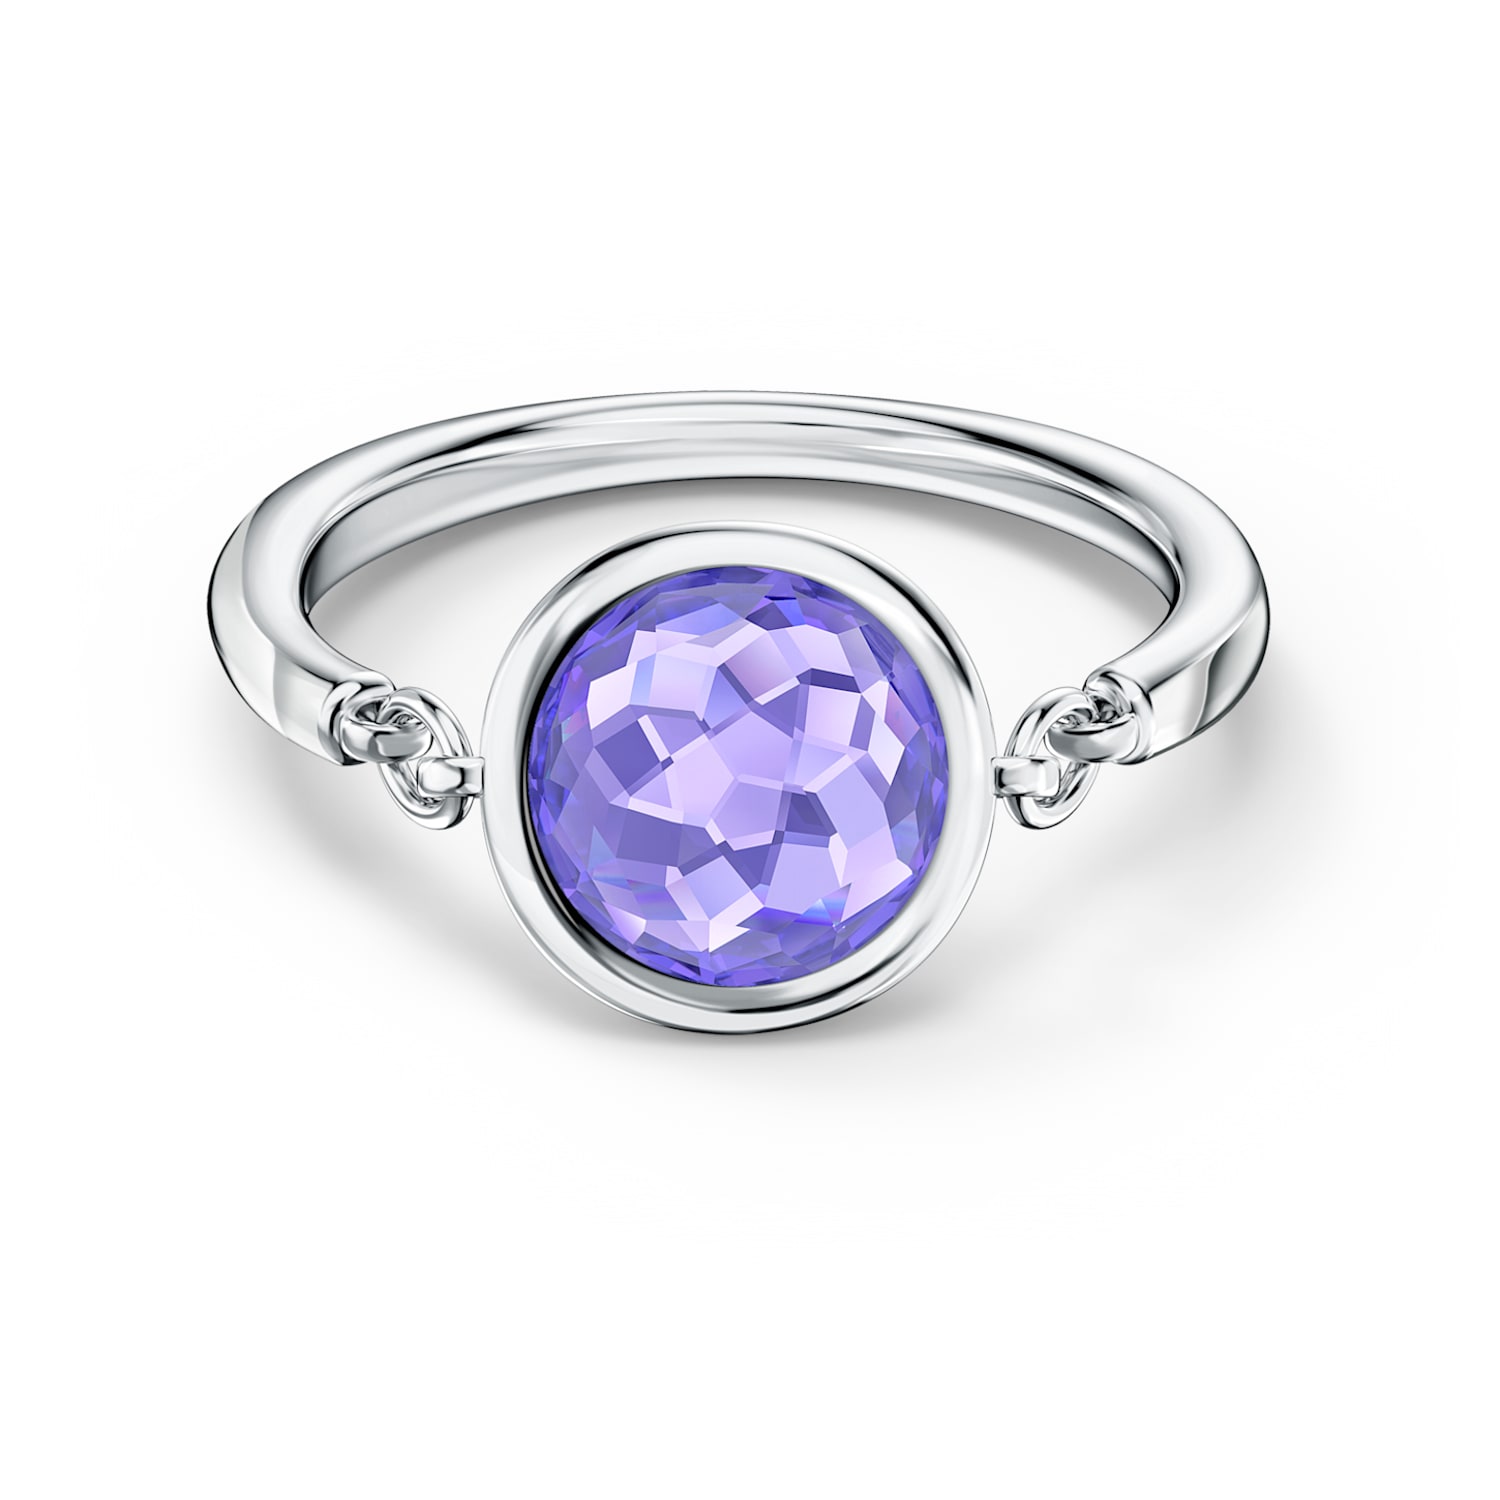 Elegant Size 8 Jewelry white Black gold Rhodium Plated purple Ring Wedding Ring